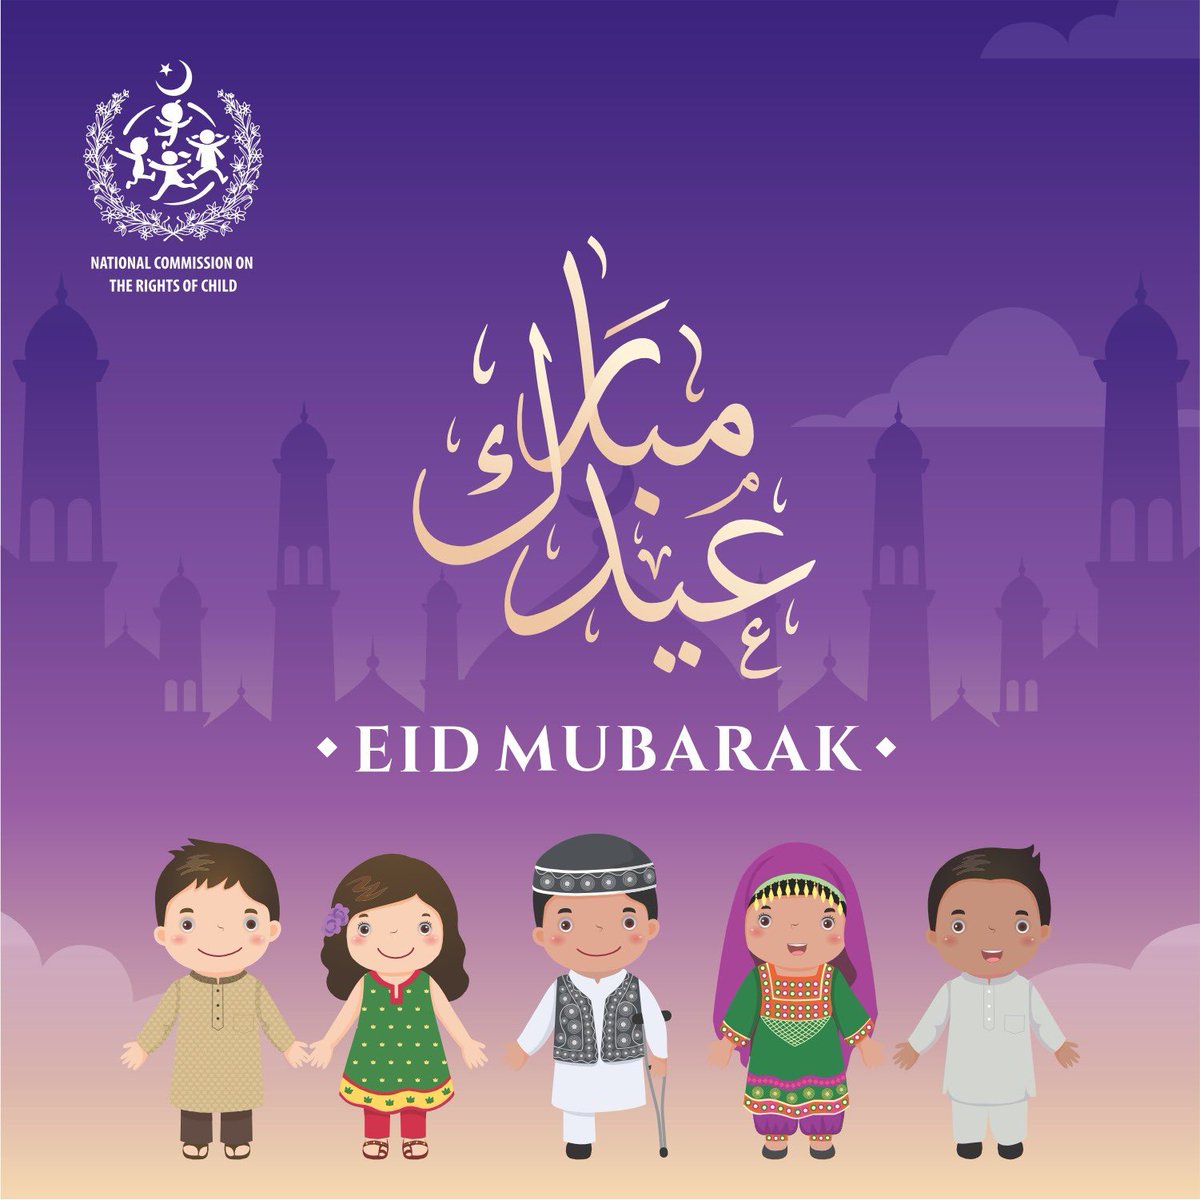 Wishing Eid Mubarak to everyone celebrating!